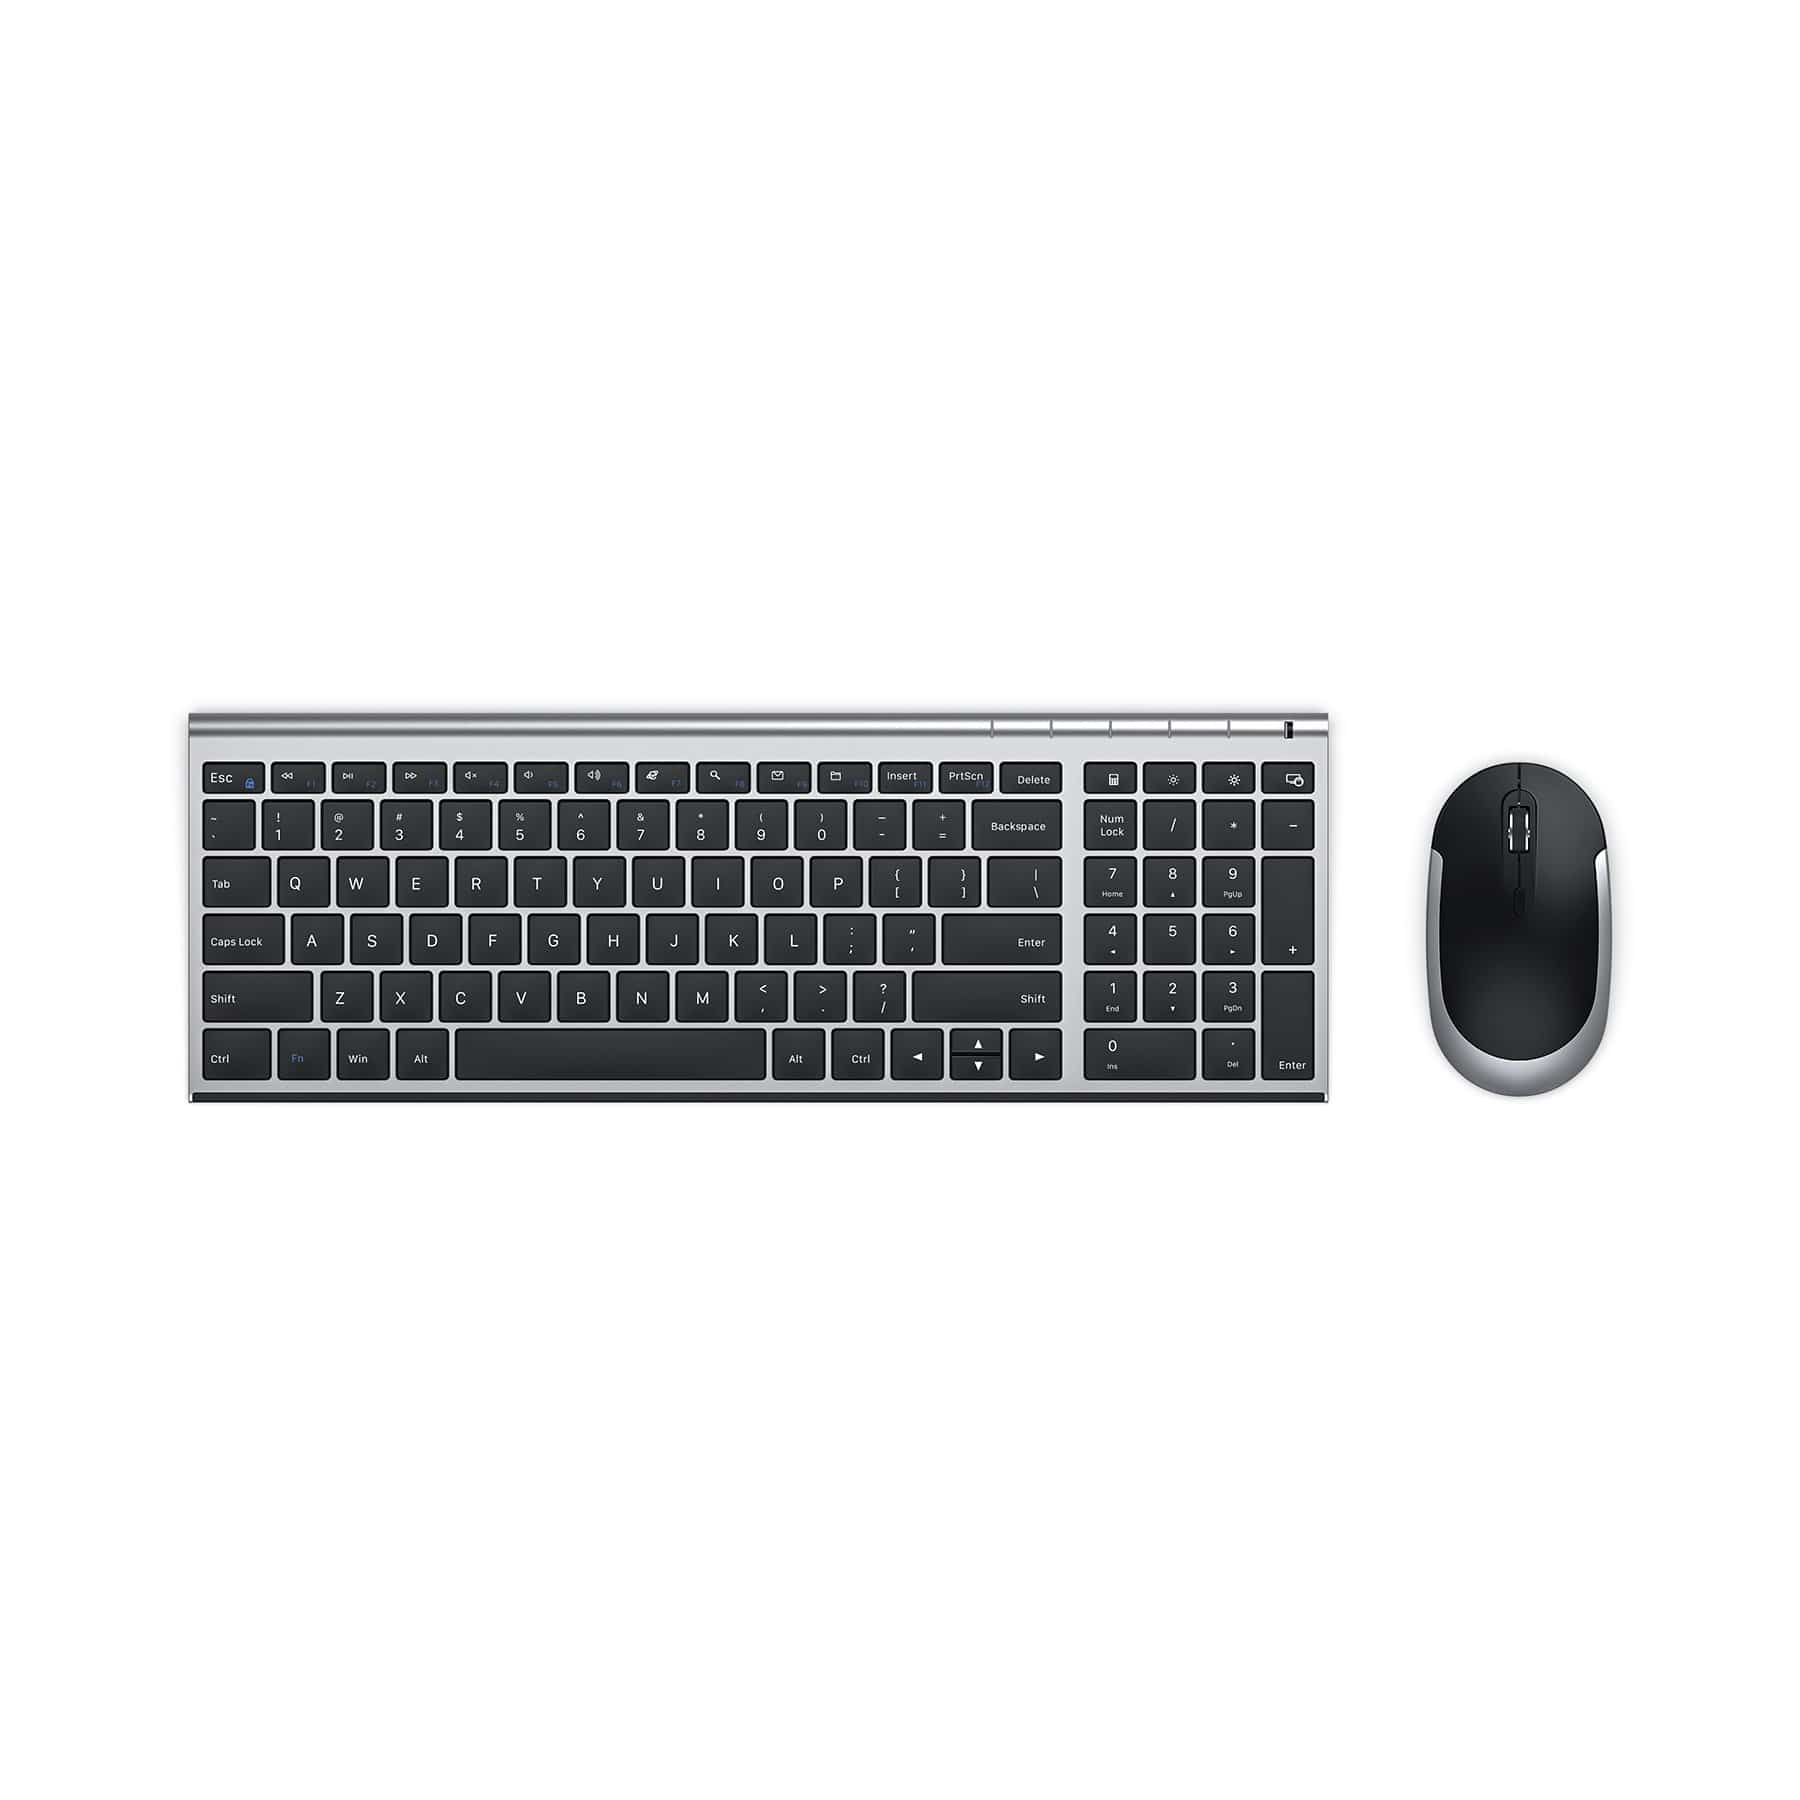 Jelly Comb KS15-2 Wireless Keyboard & Mouse Combo